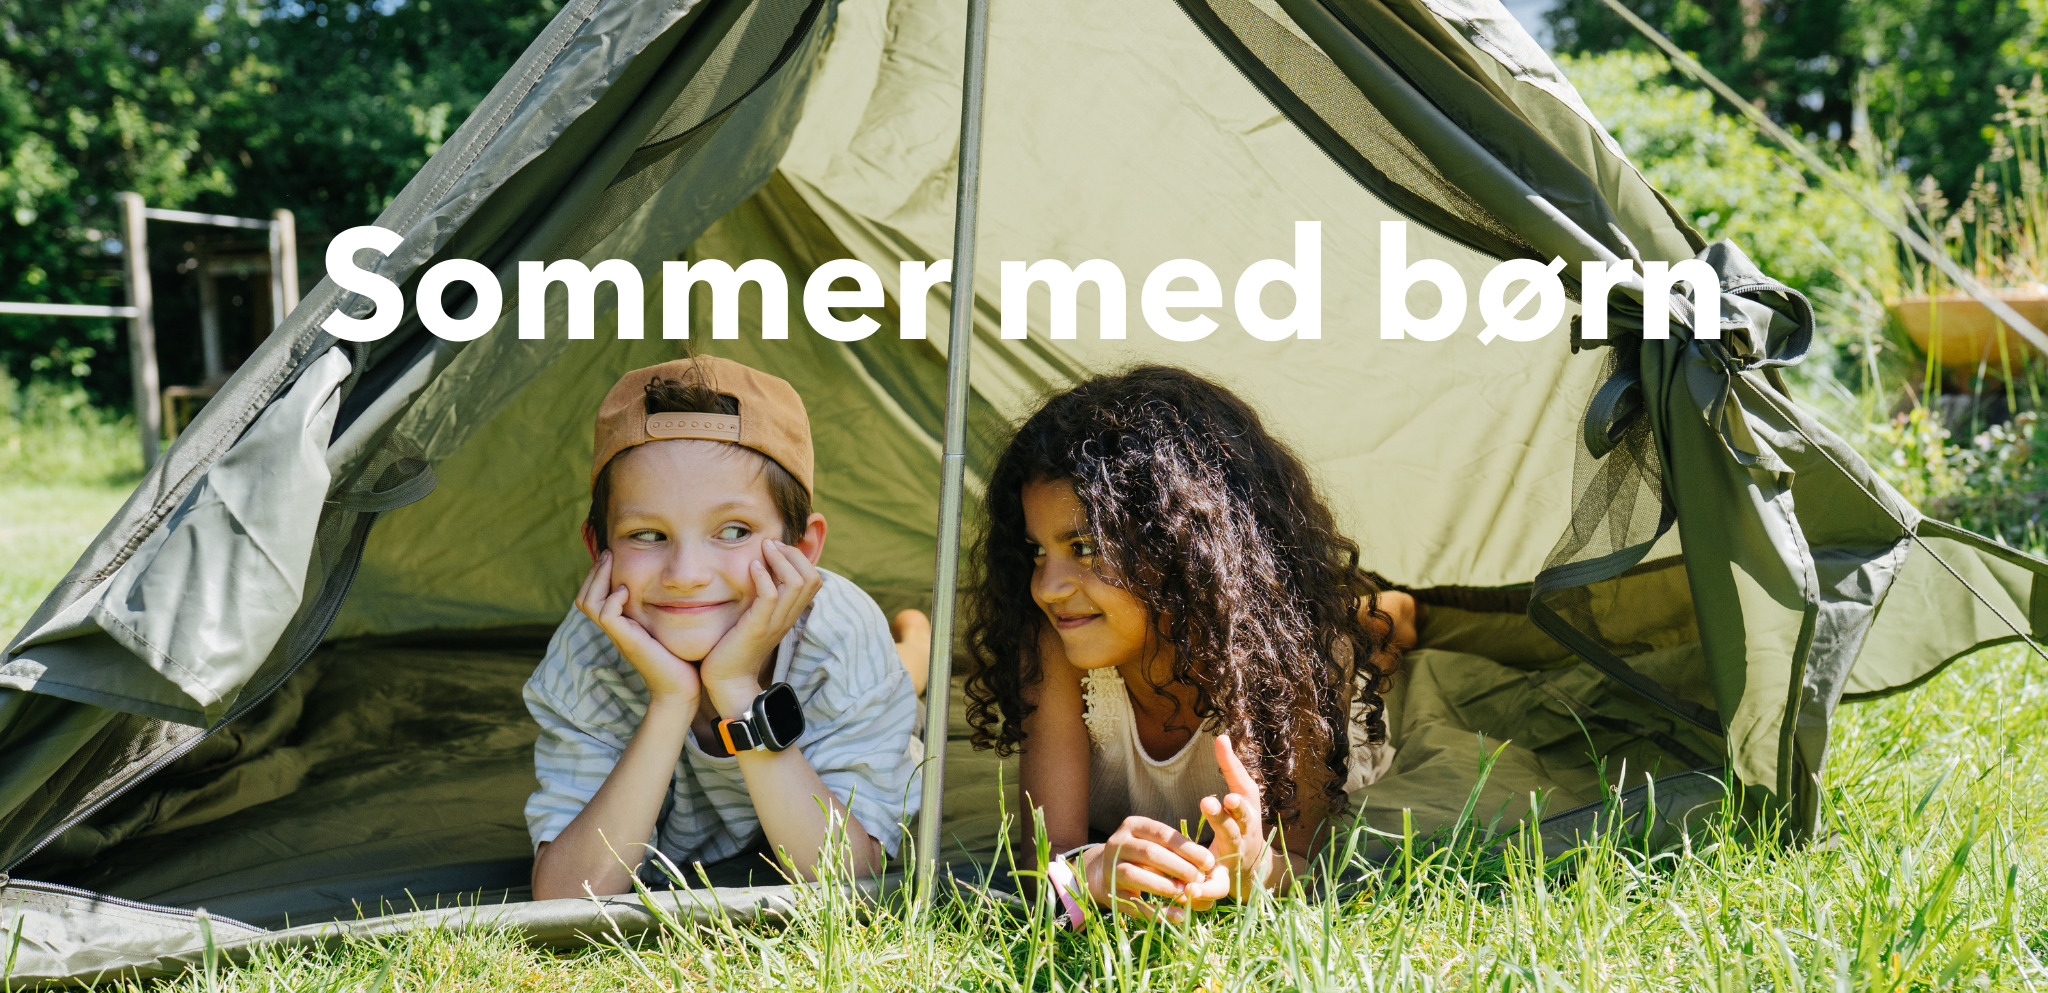 God sommerferie med børn: Her er 15 sjove sommeraktiviteter for børn!